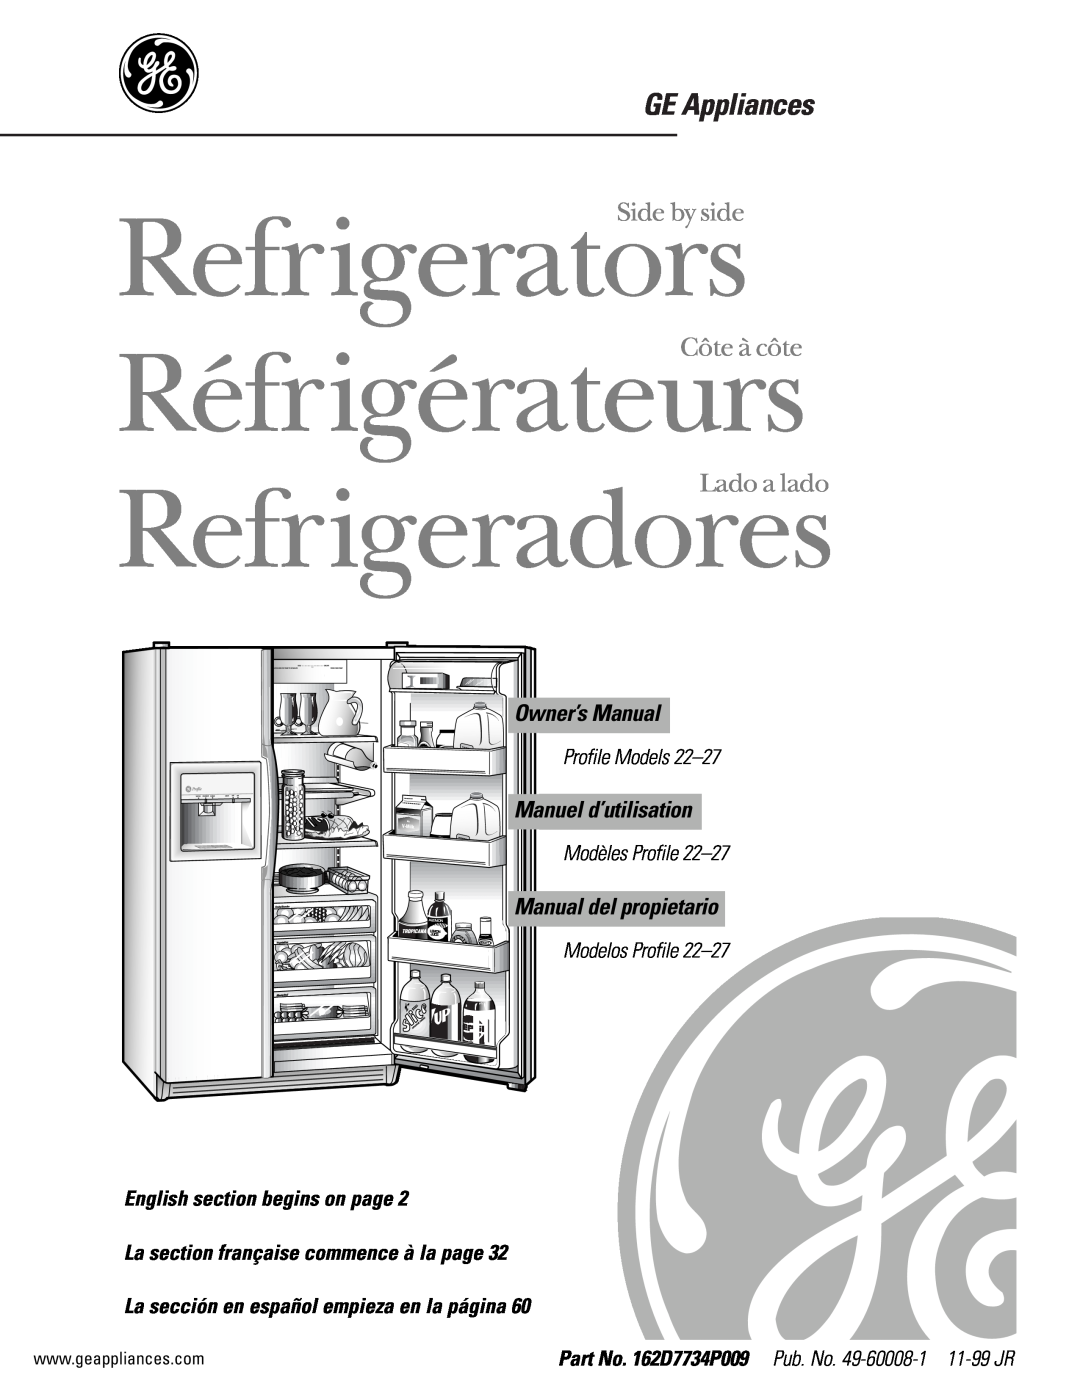 GE 22-27 owner manual GE Appliances, Manuel d’utilisation, Manual del propietario, Profile Models 22–27, Refrigerators 